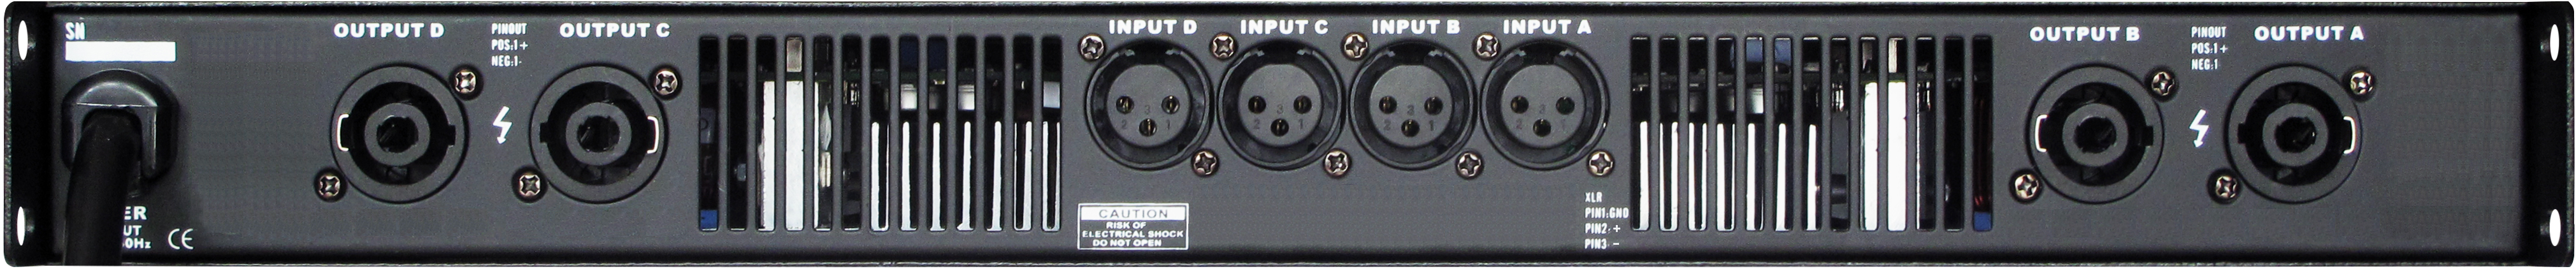 Verstärker M100Q-DSP - GISEN Audio